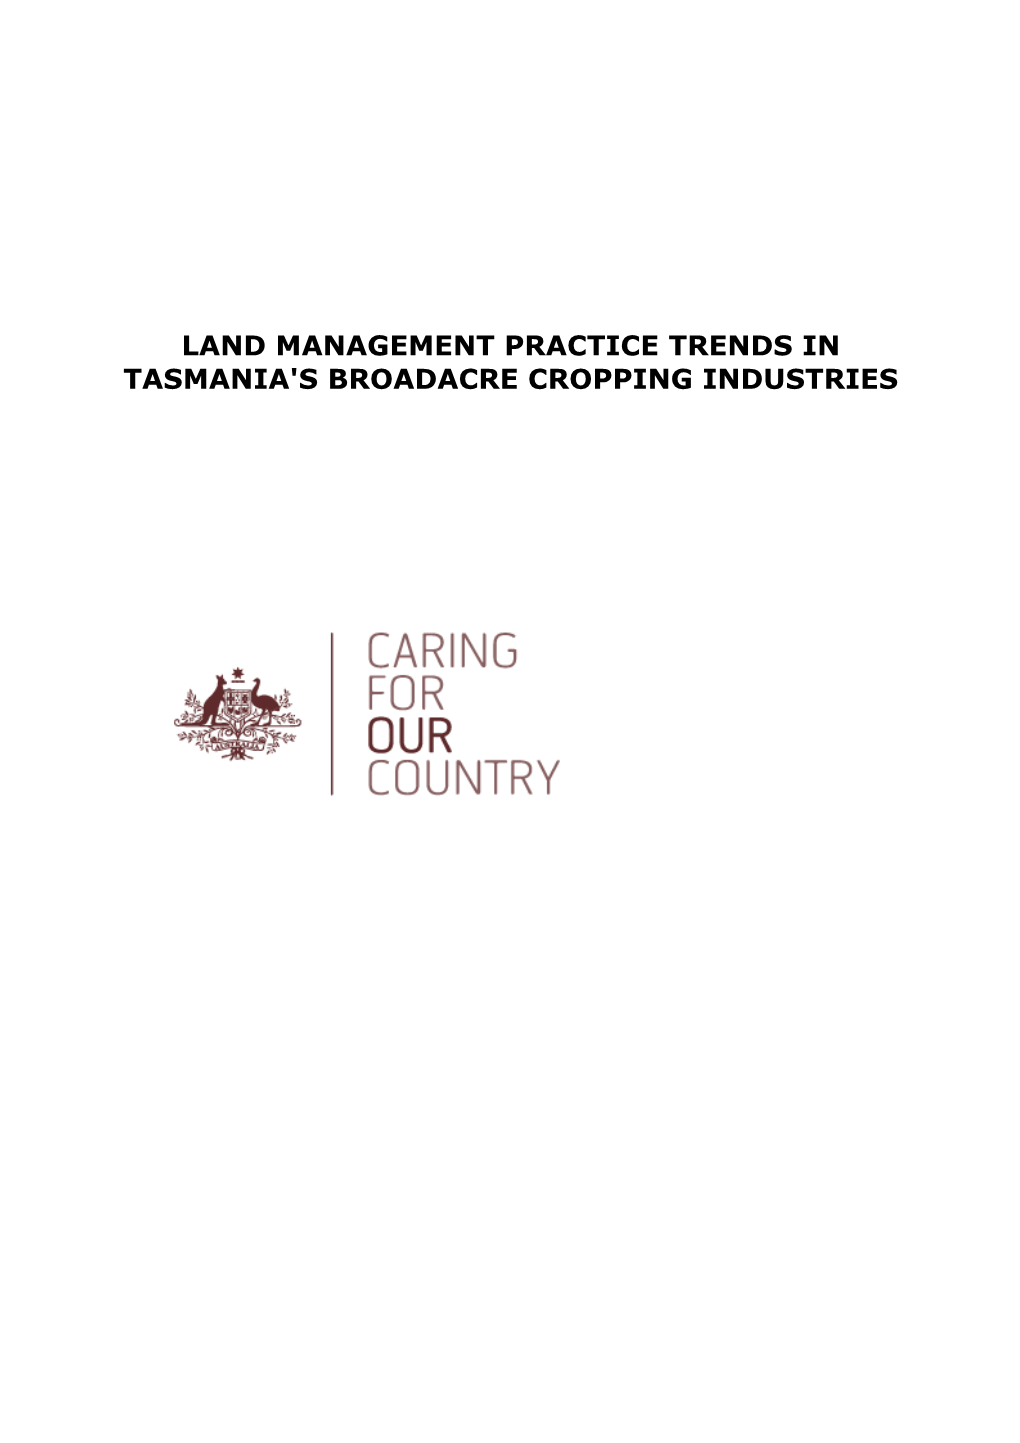 Land Management Practice Trends in Tasmania's Broadacre Cropping Industries